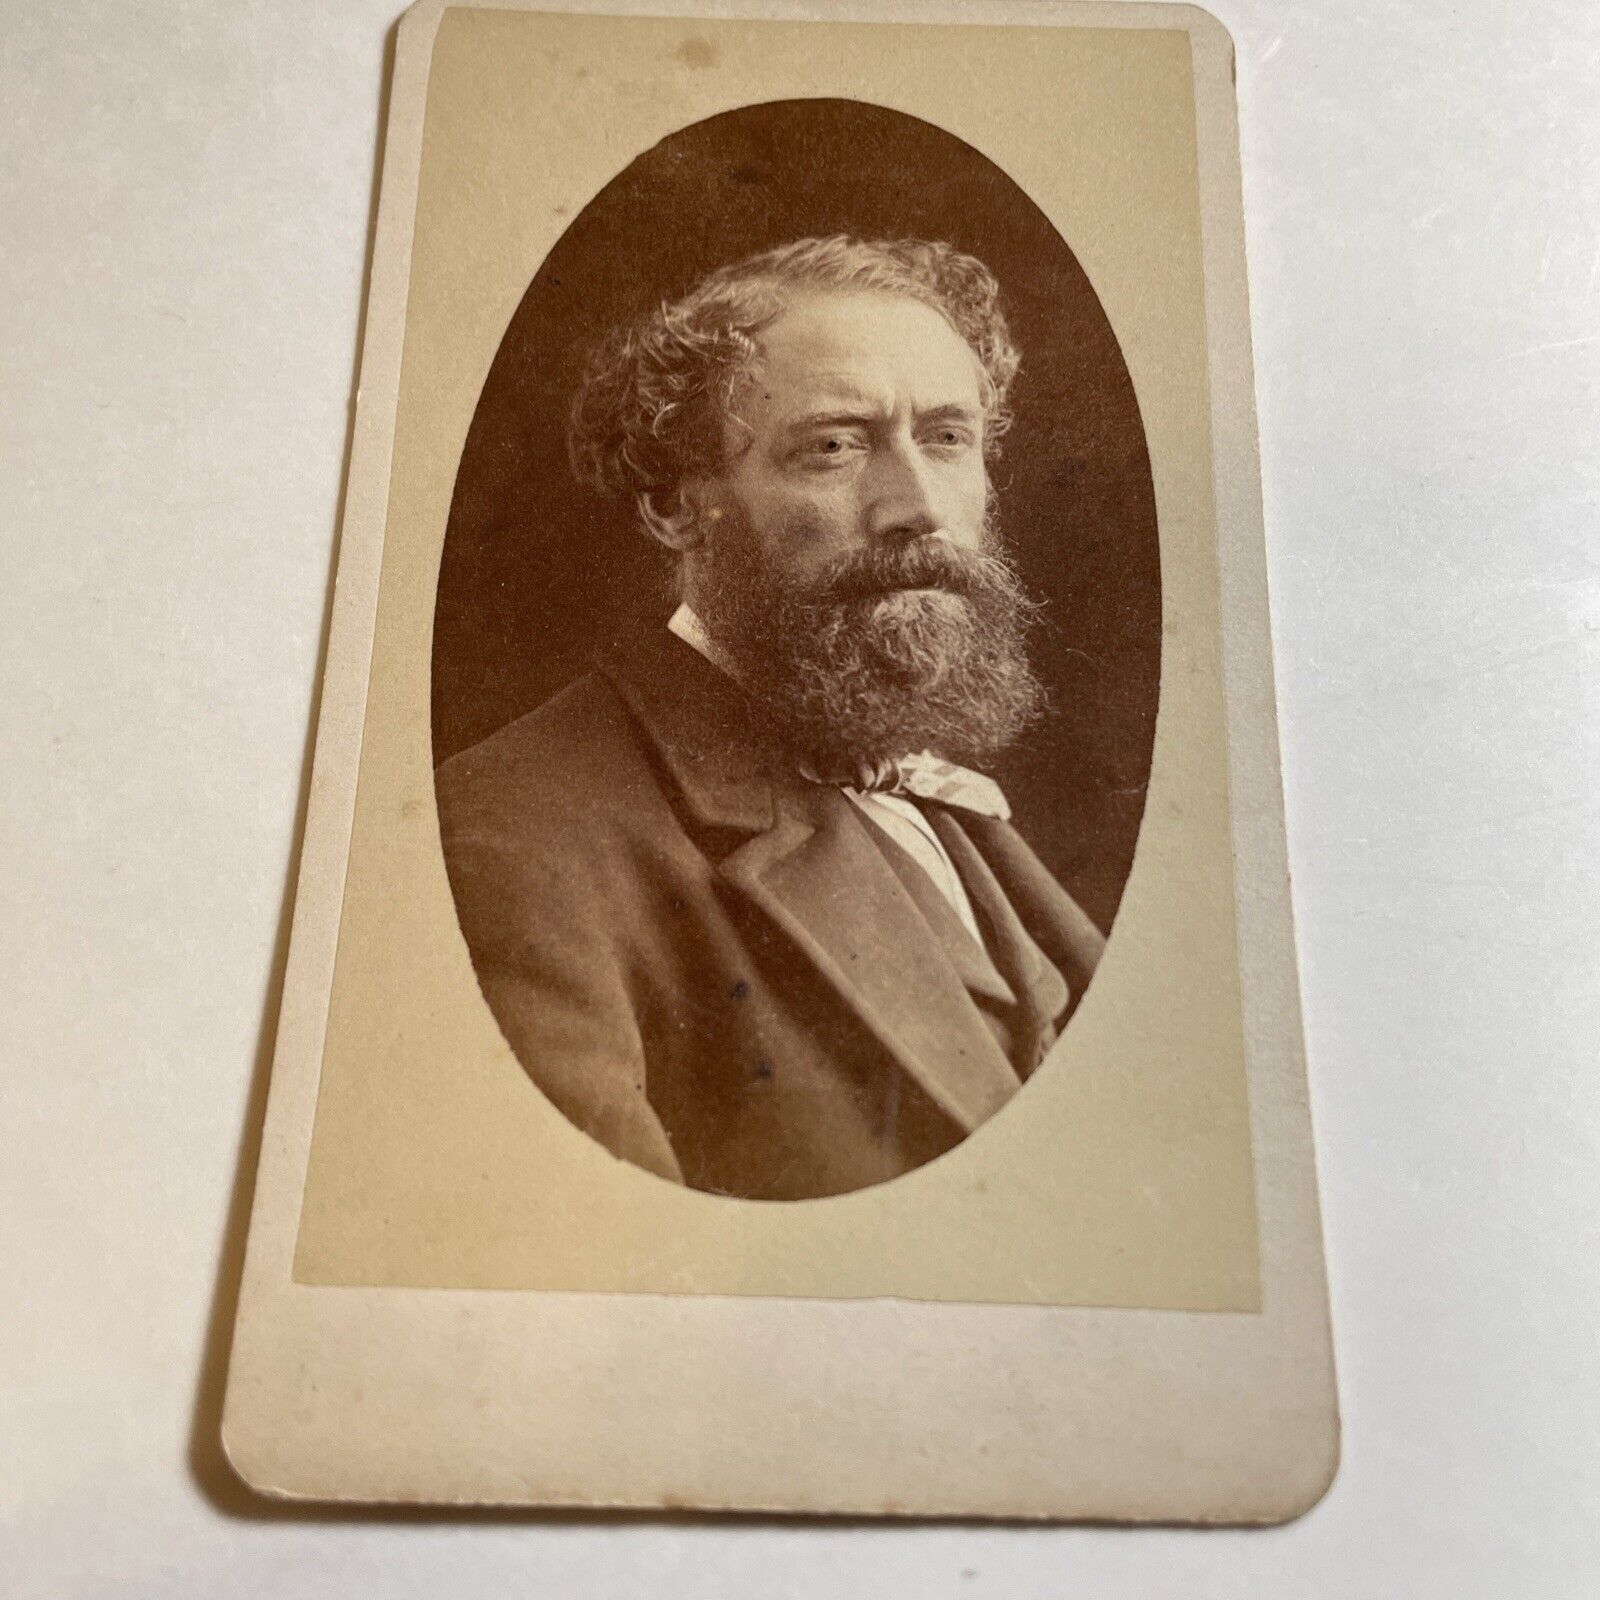 CDV 1870 S.F. CA, scare photographer S.F. CA GENTLEMAN CURLY HAIR BUSY BEARD